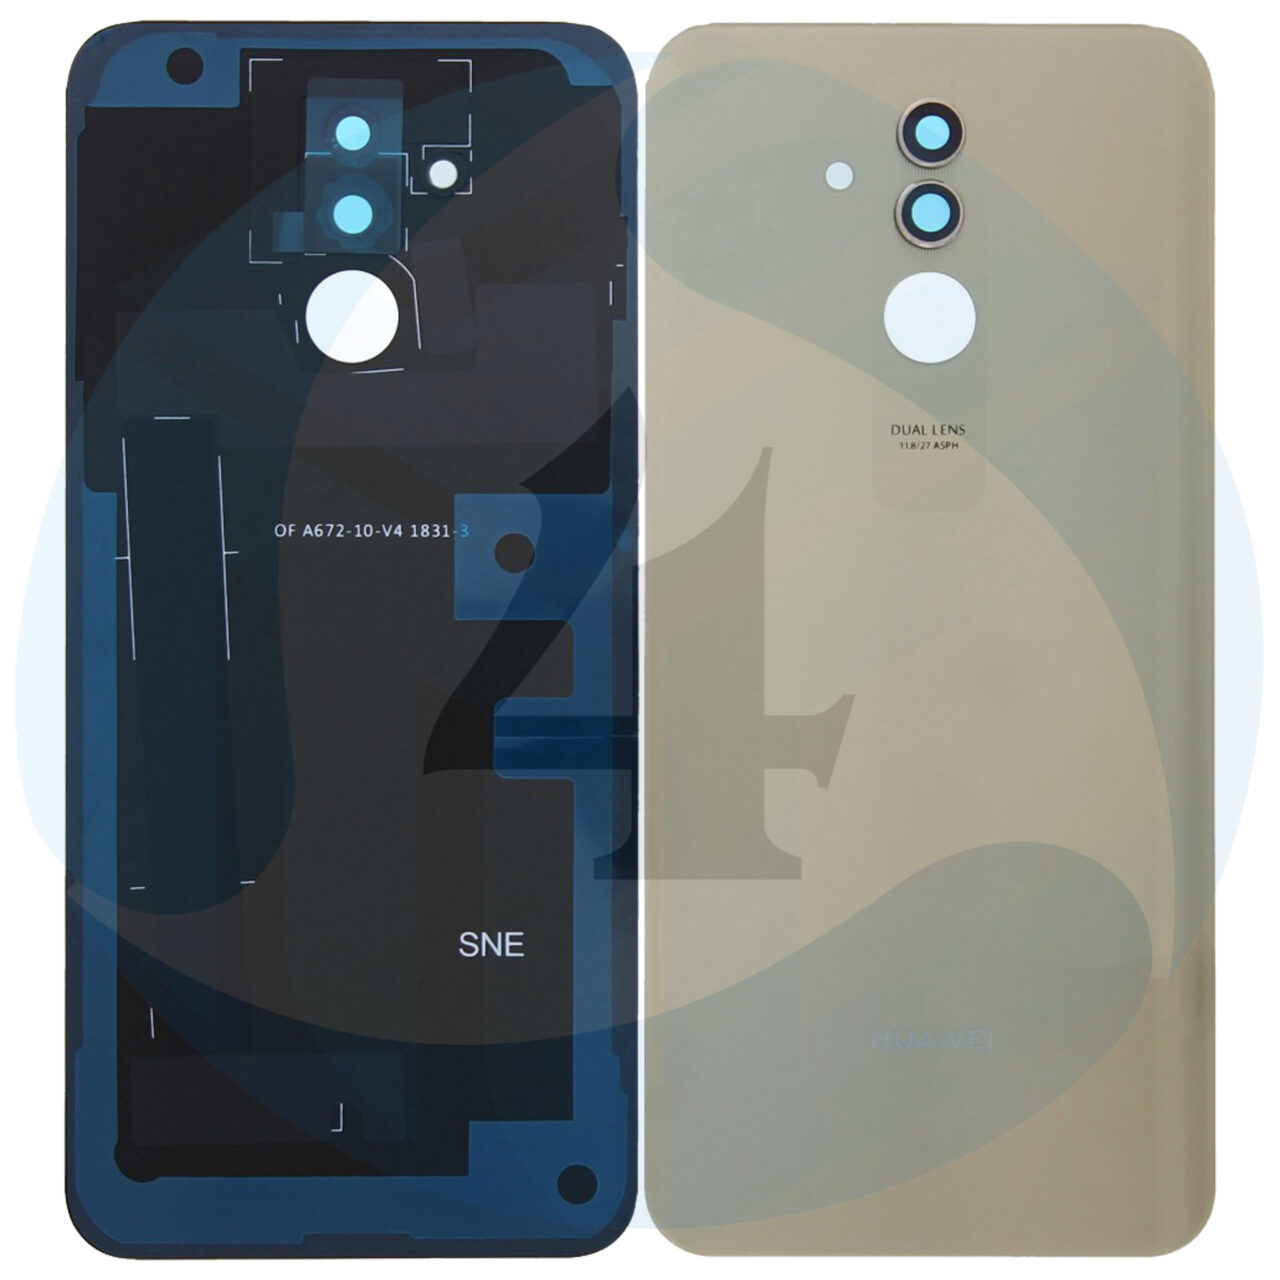 Huawei Mate 20 Lite SNE LX1 SNE L21 Battery Cover Platinum Gold